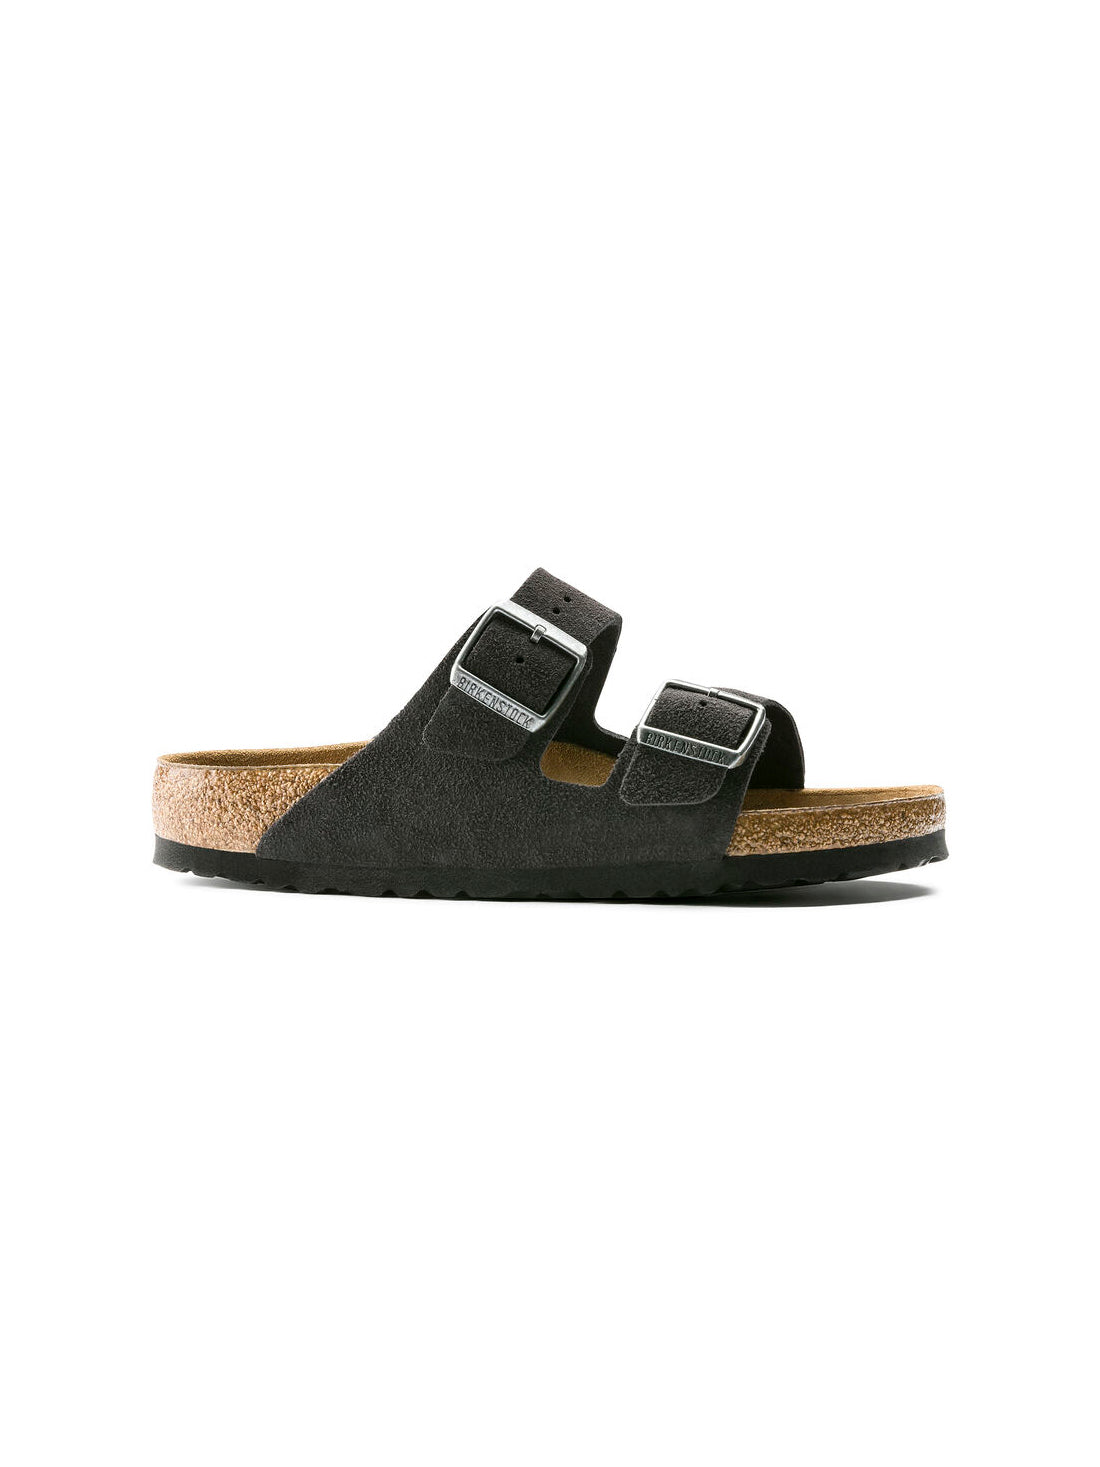 birkenstock arizona soft footbed sandal in suede leather velvet gray narrow